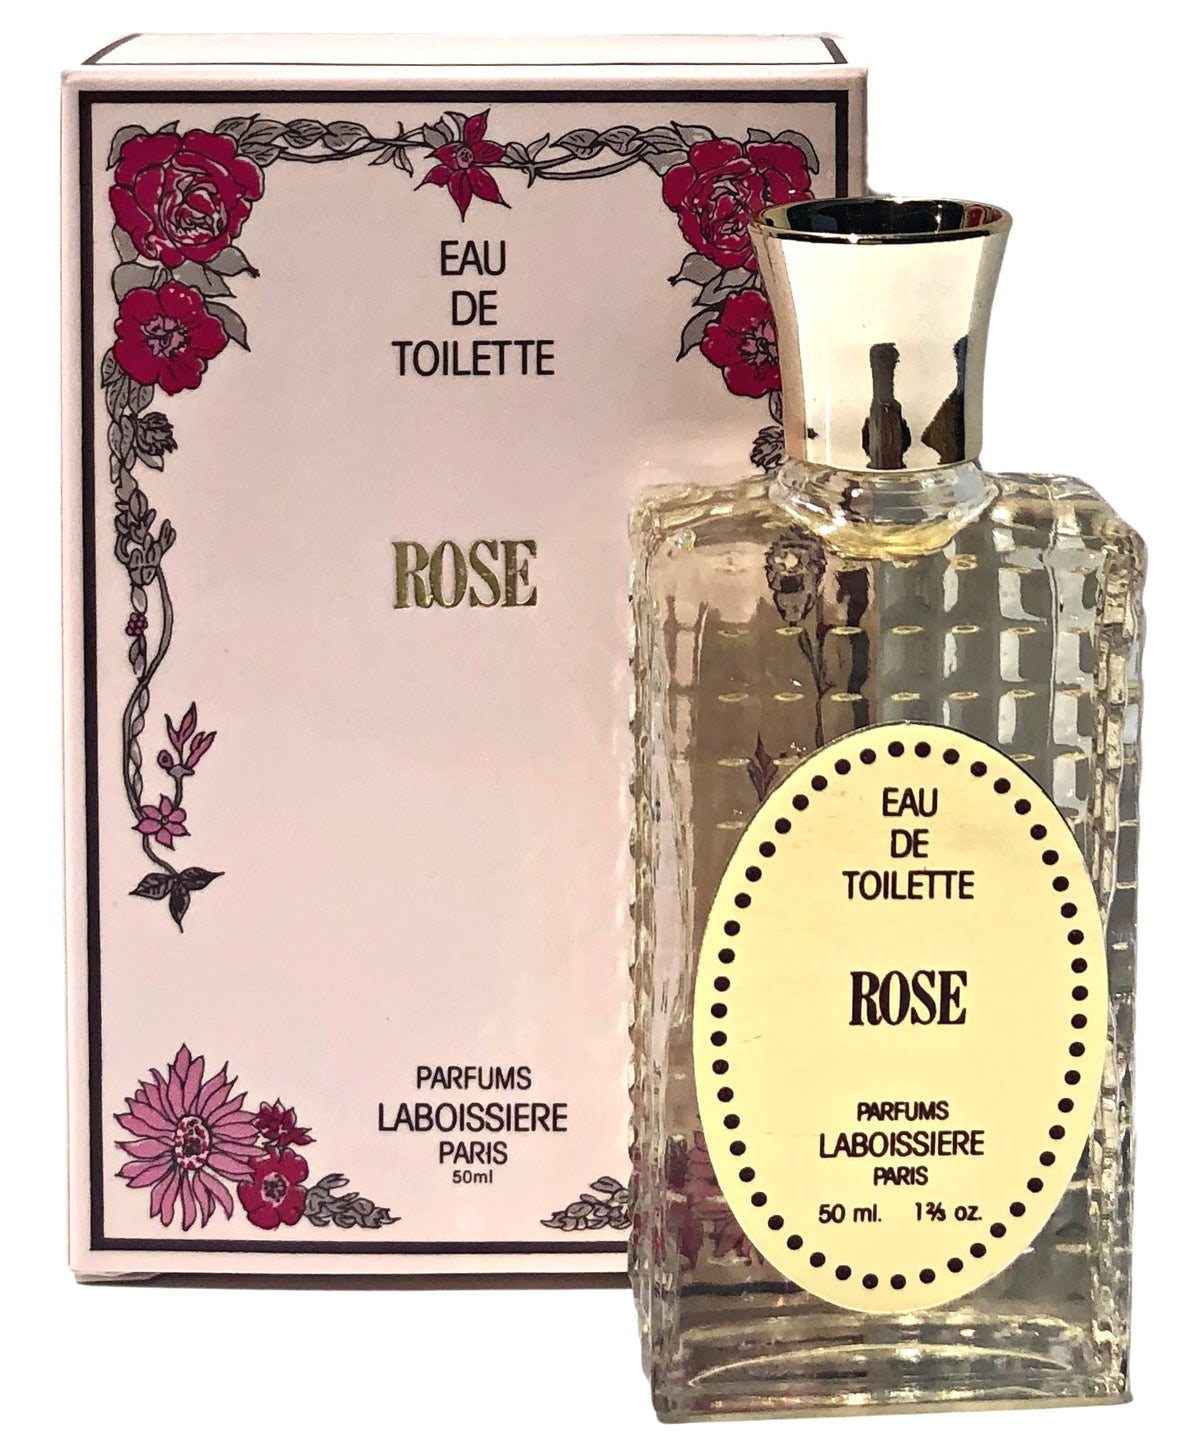 A Laboissiere Rose Eau de Toilette next to its pink and floral decorated box labeled "Laboissiere Parfums Paris, 50ml." The bottle is clear with